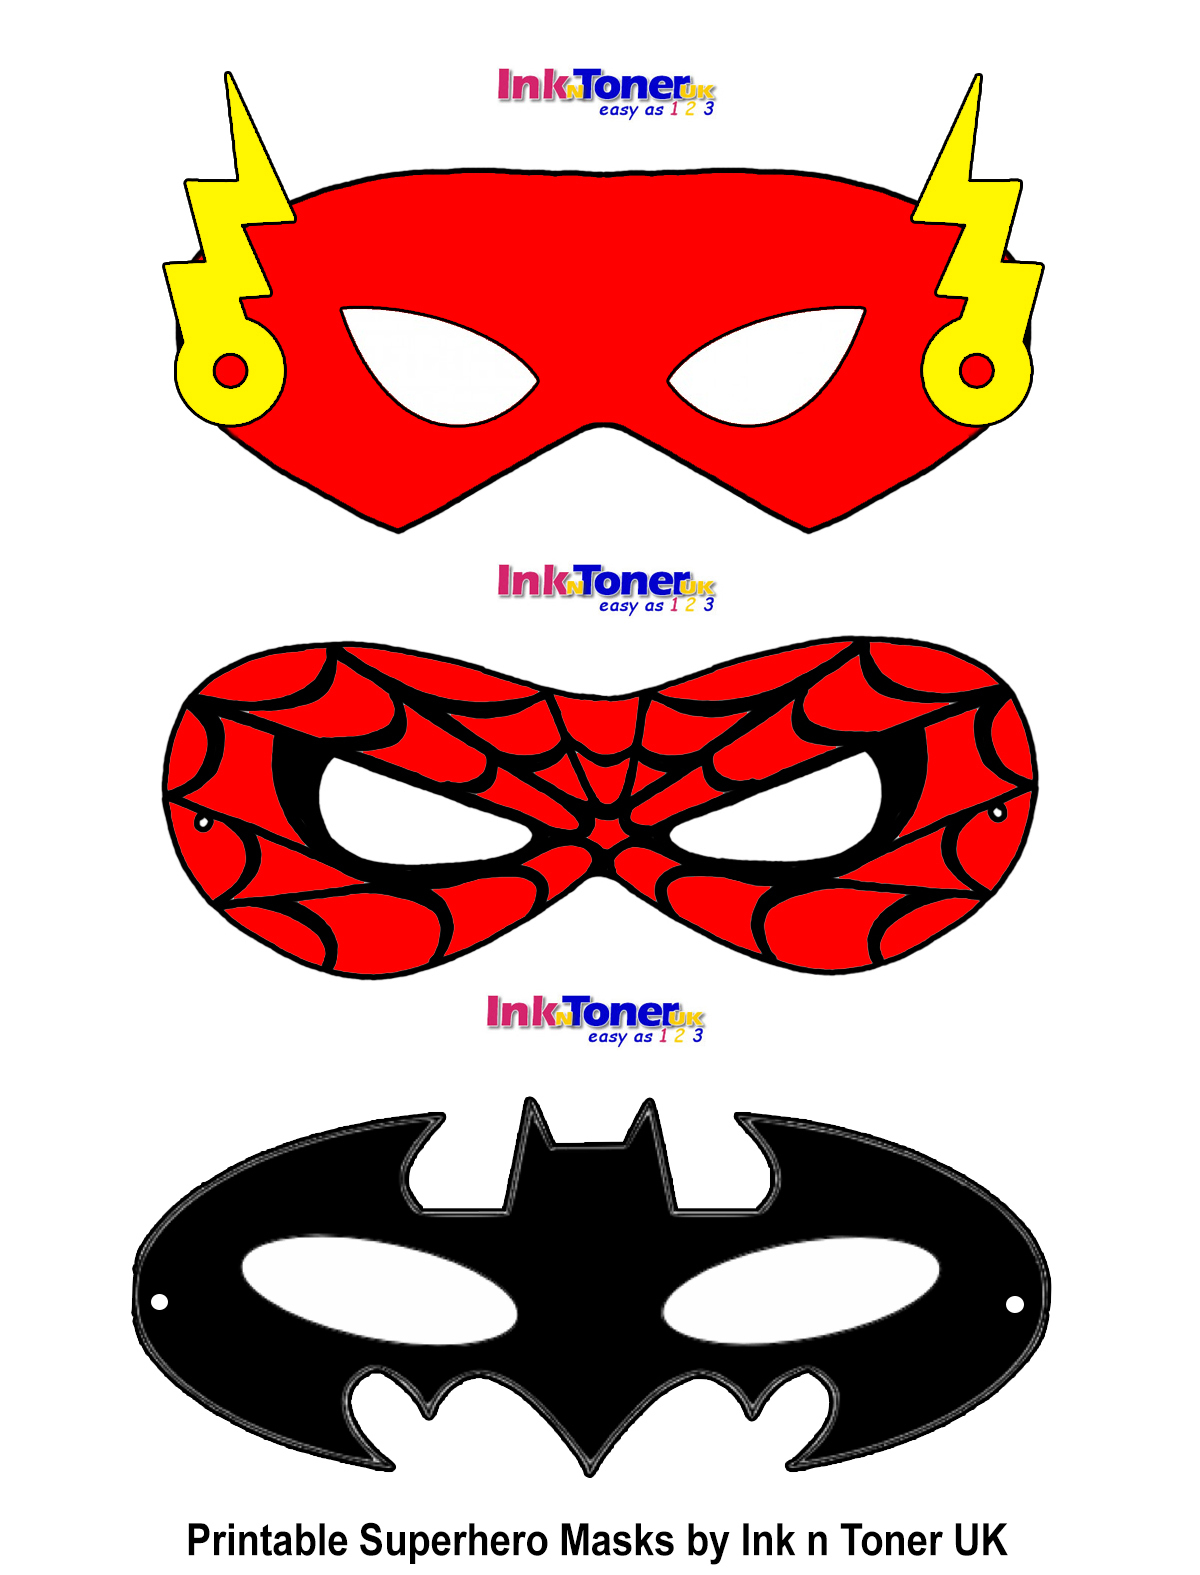 Printable Superhero Masks For Super Hero Day | Inkntoneruk Blog - Free Printable Superhero Masks